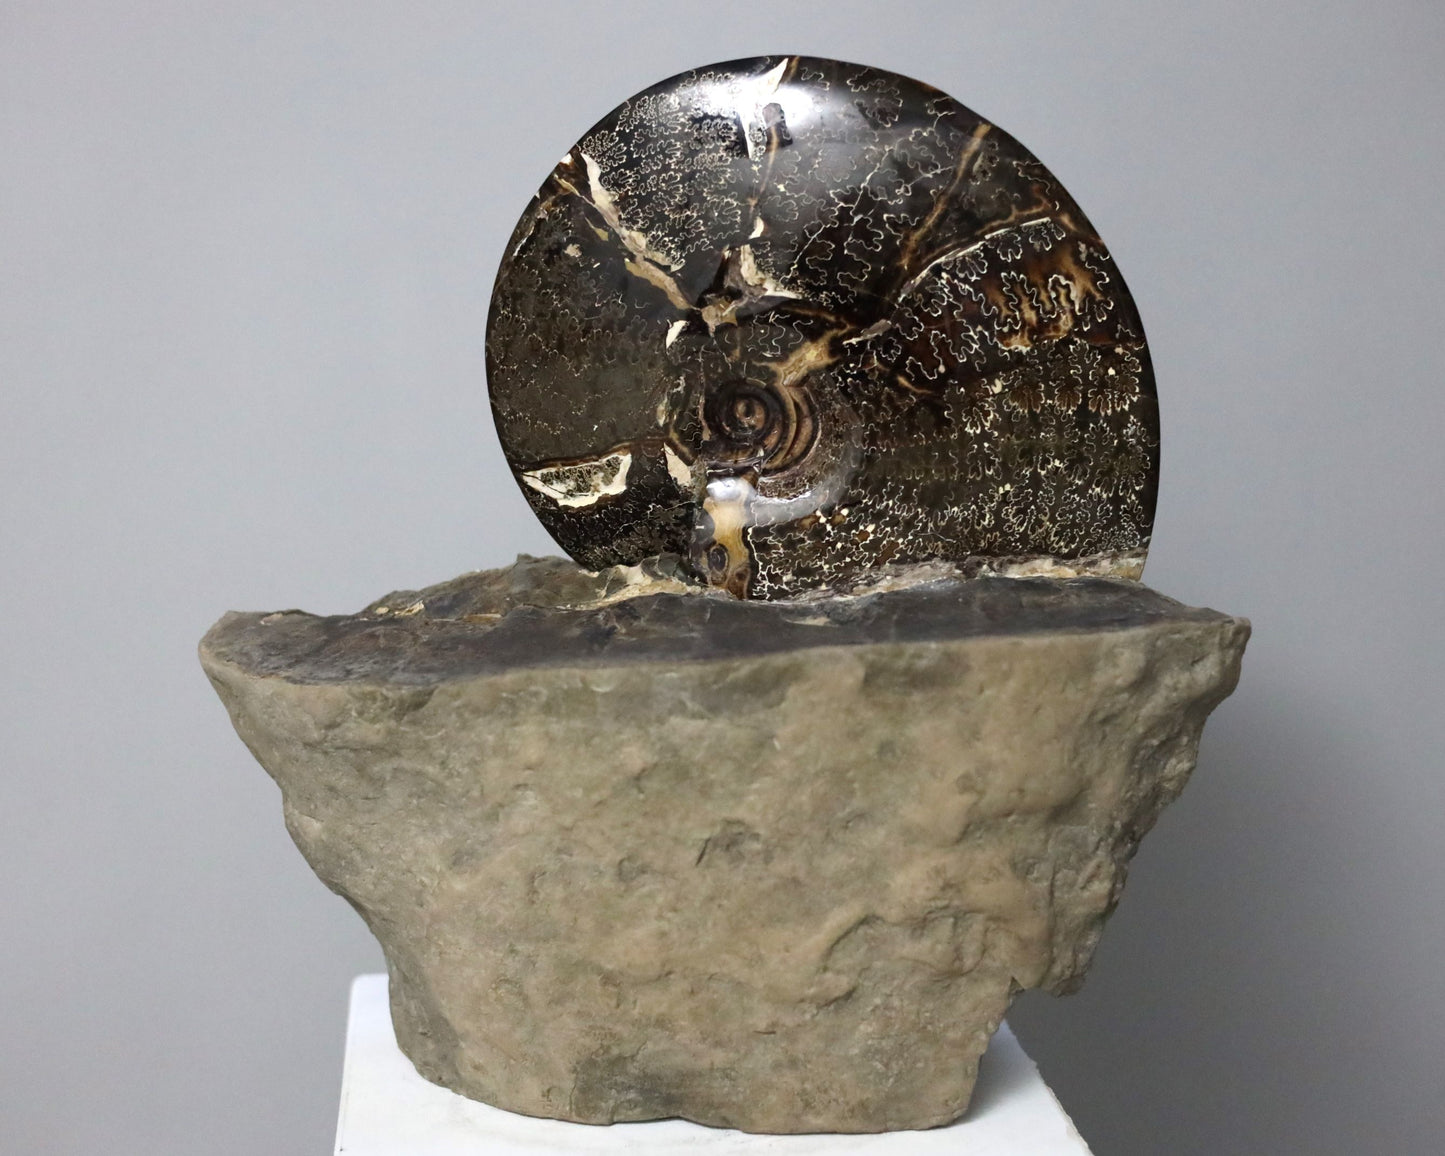 Ammonite | South Dakota, USA